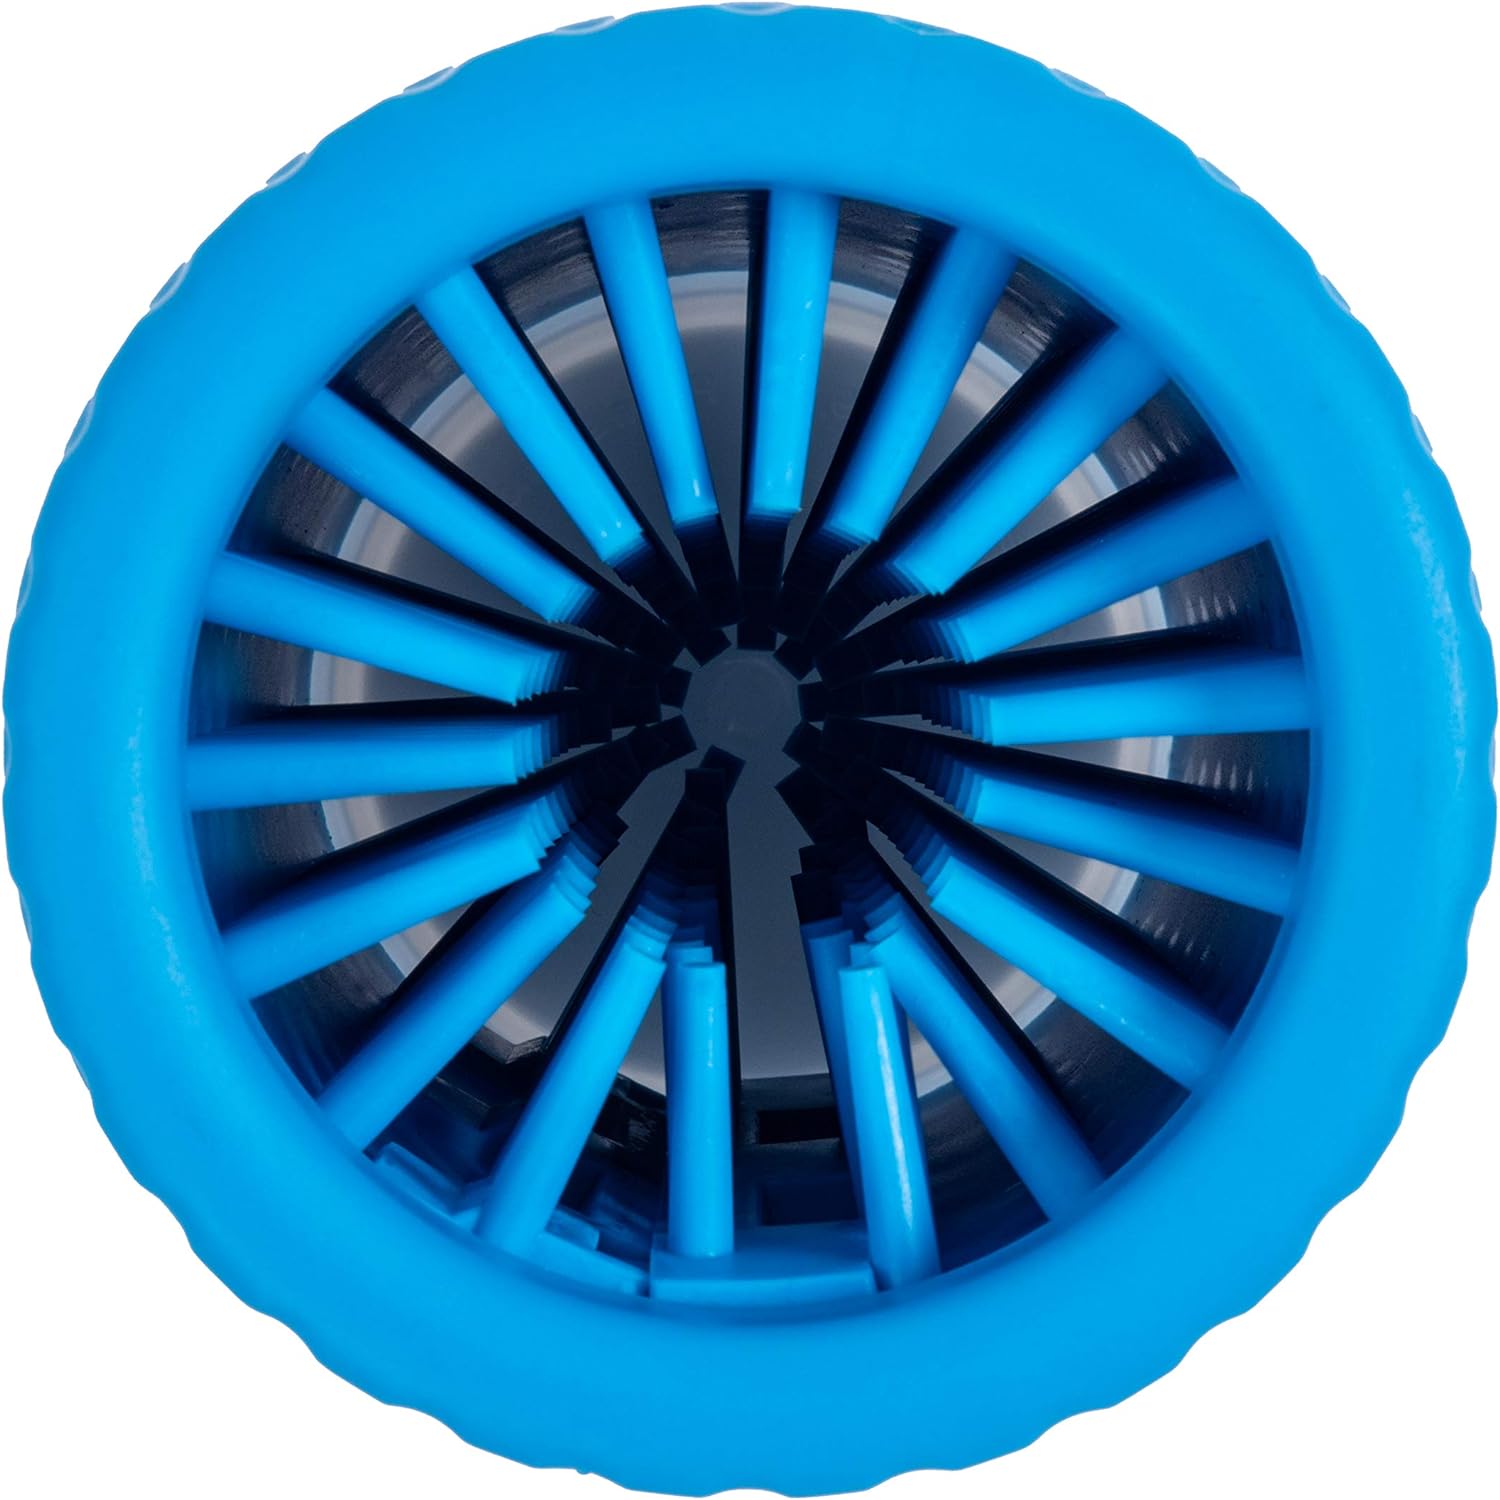 Dexas MudBuster Portable Dog Paw Washer, Medium Size, Pro Blue